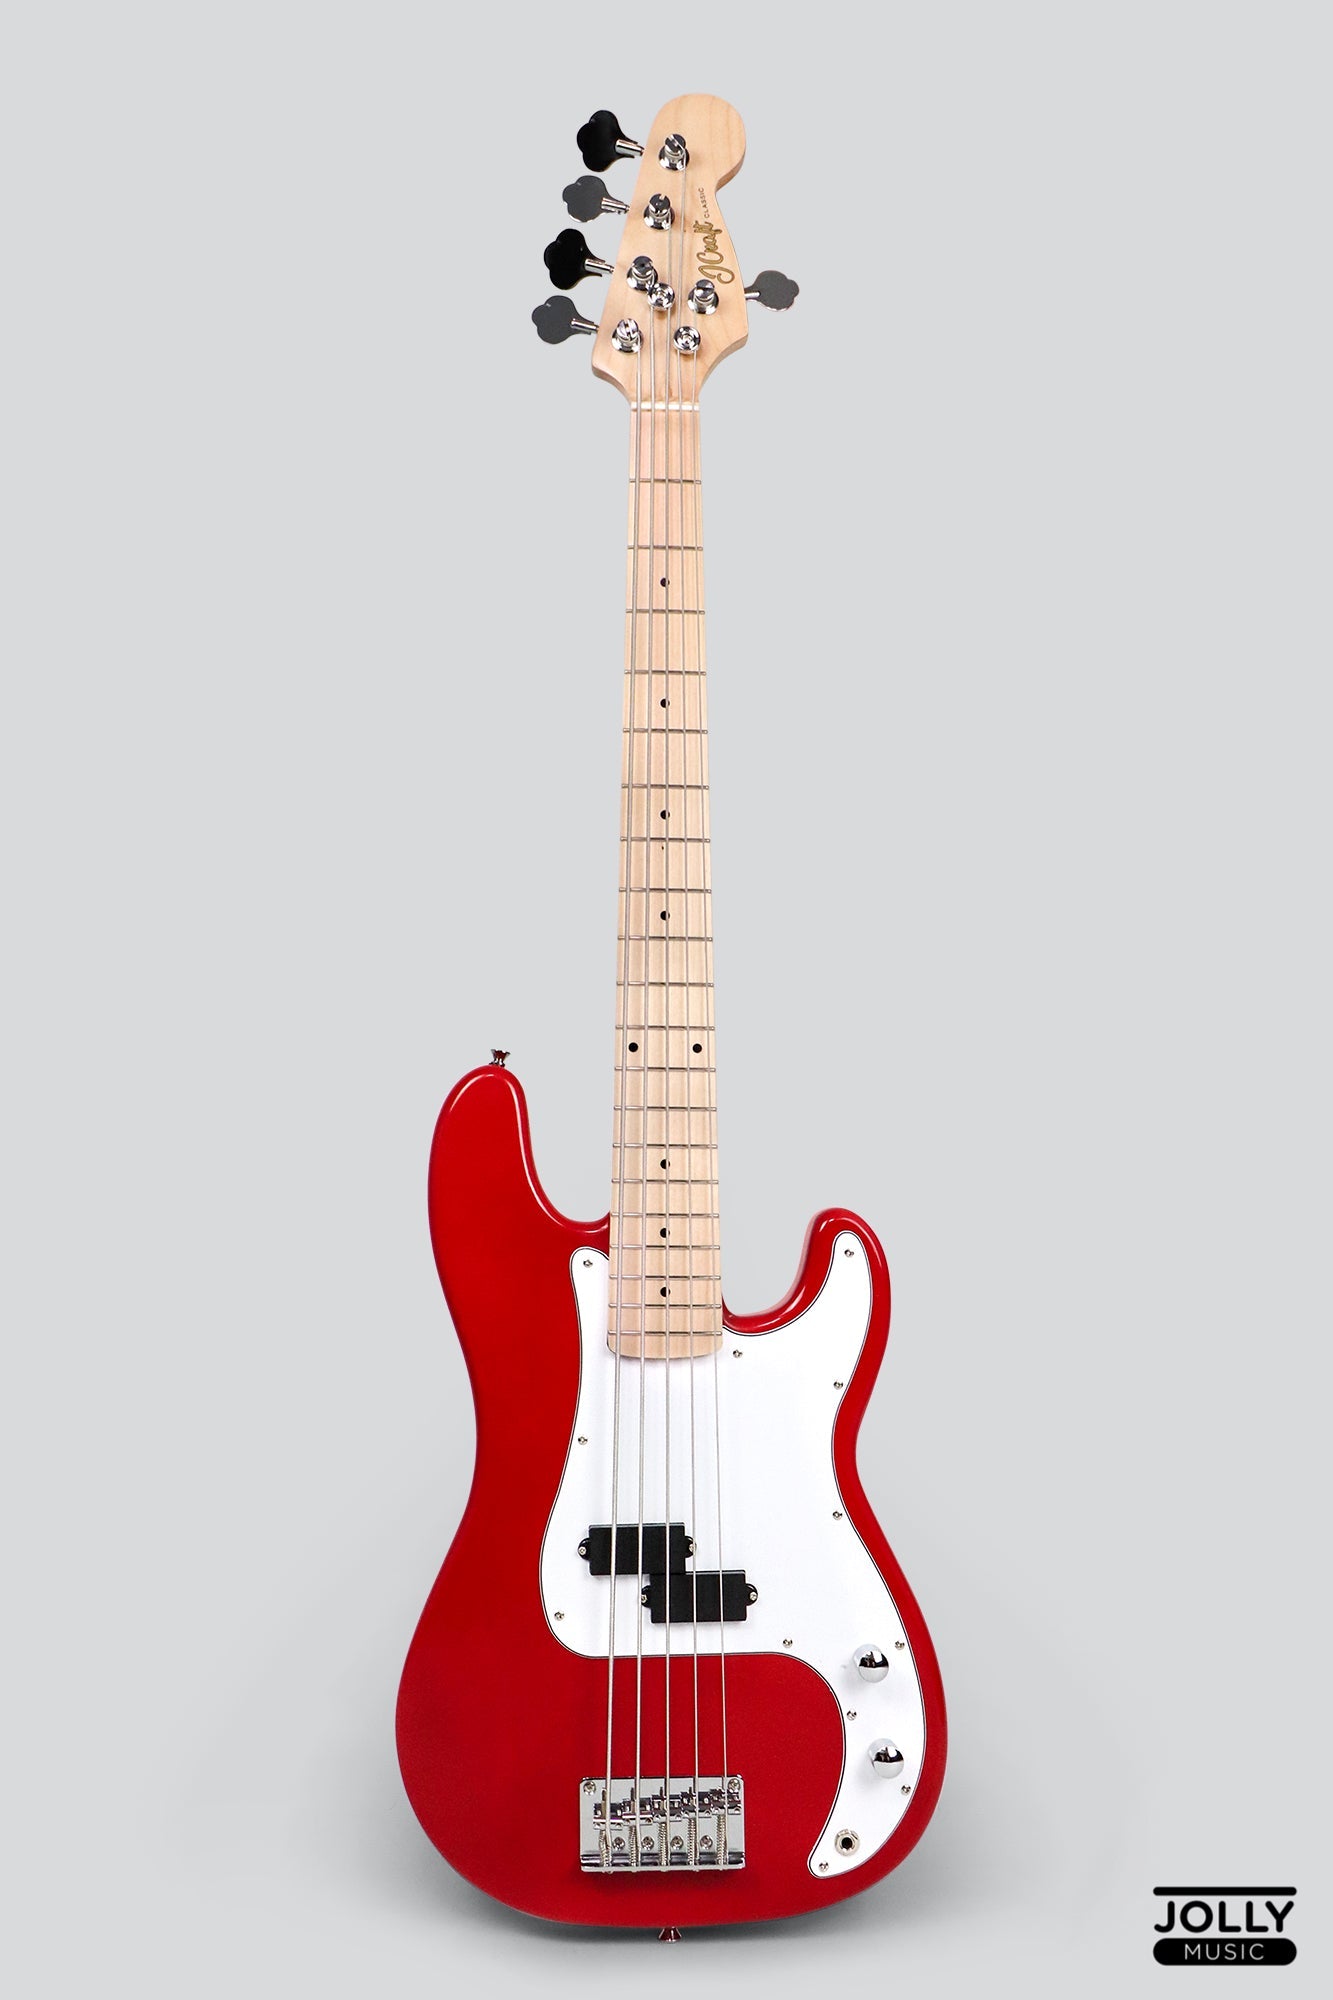 JCraft PB-1 5-String Electric Bass Guitar with Gigbag - Metallic Red